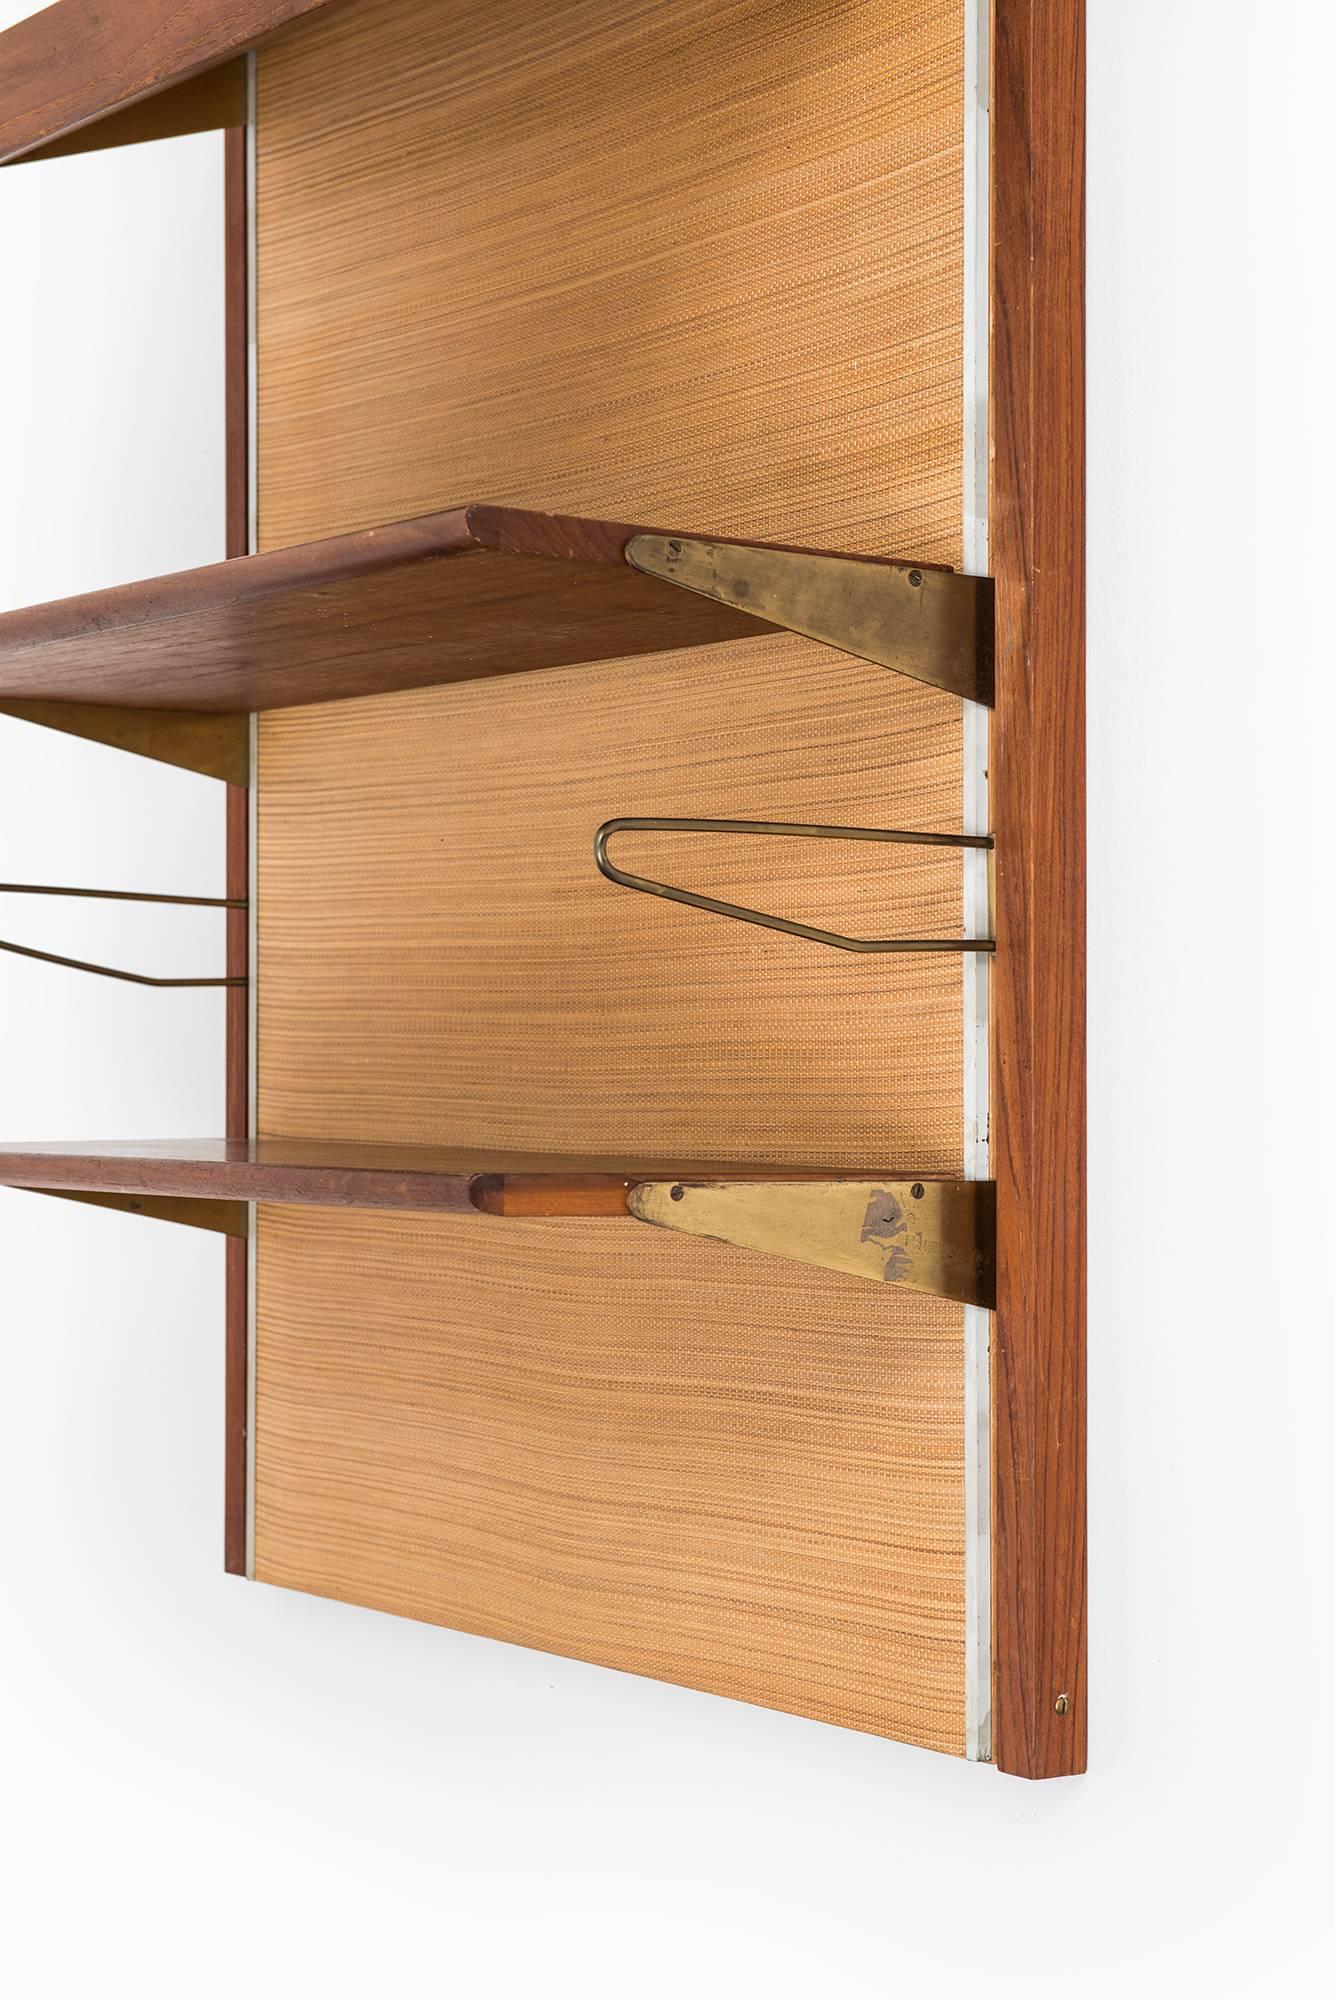 Rare wall-mounted bookcase designed by Finn Juhl. Produced by Bovirke in Denmark.